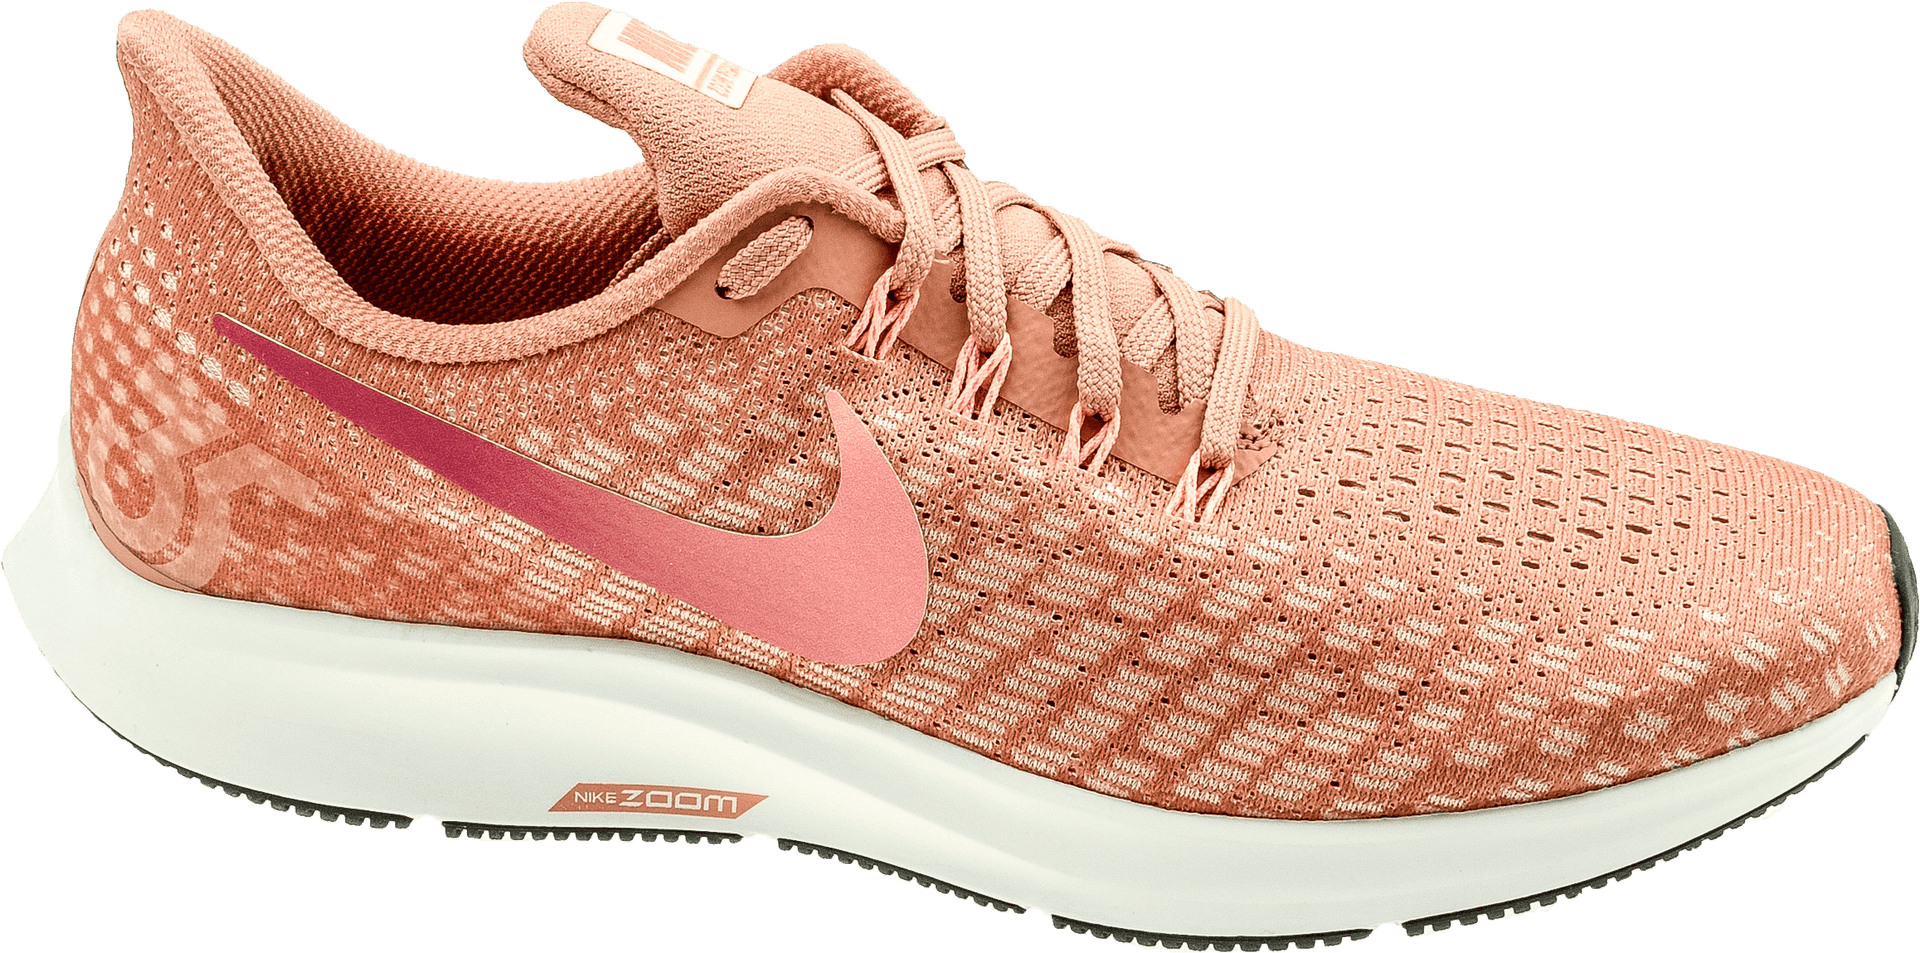 Nike Zoom Running Shoe Peach PNG